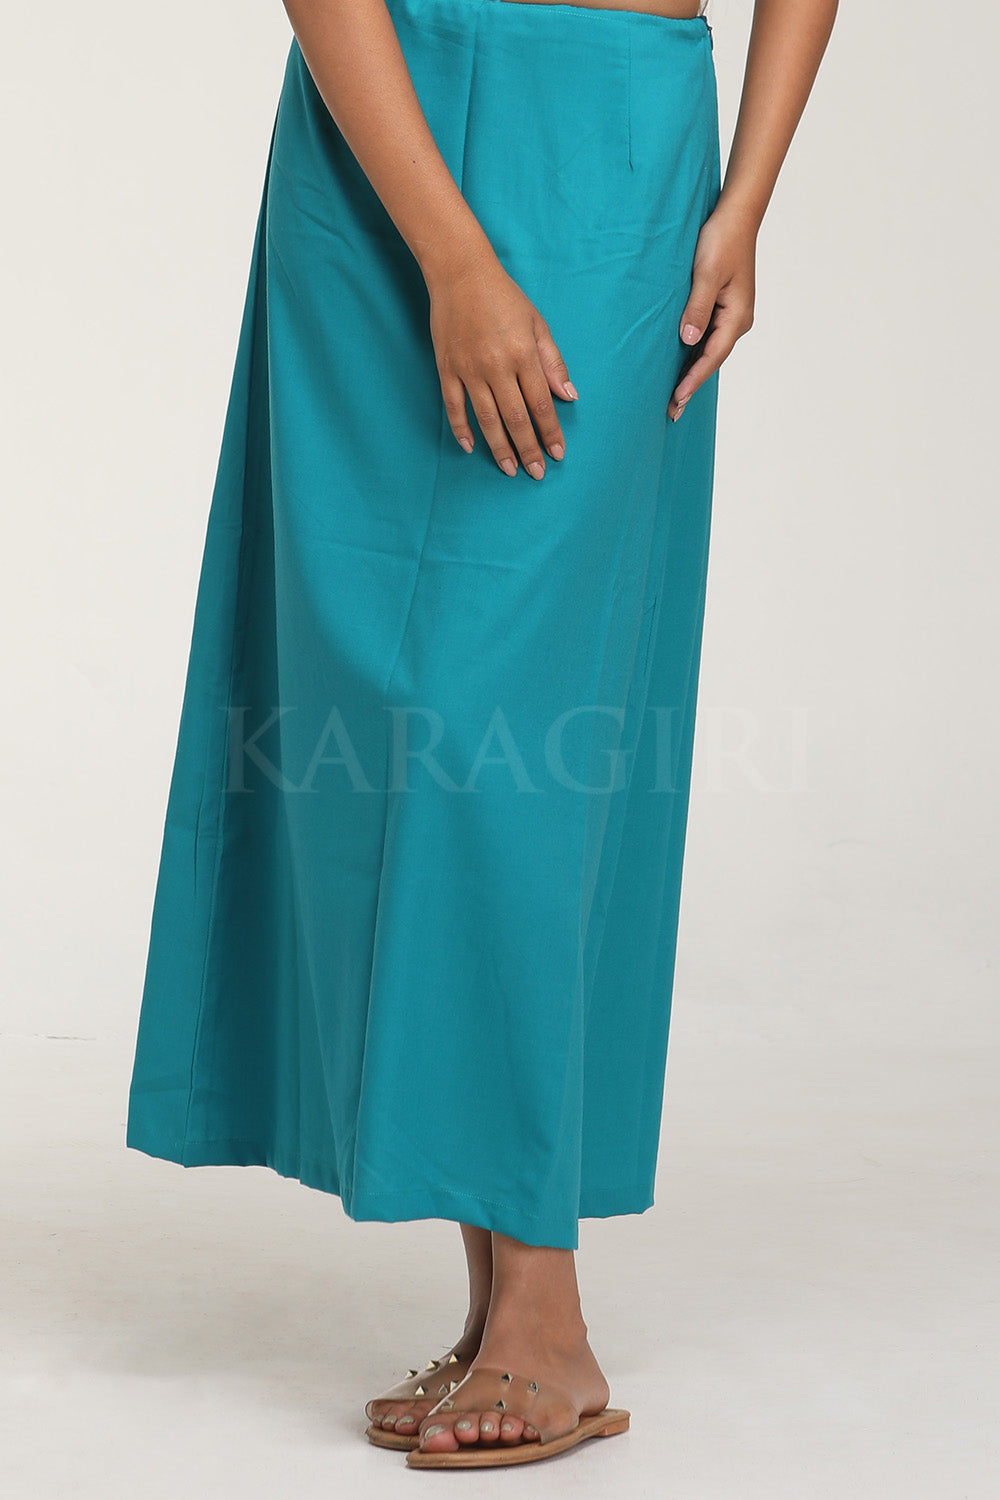 Buy Turquoise Blue Petticoat online-Karagiri – Karagiri Global